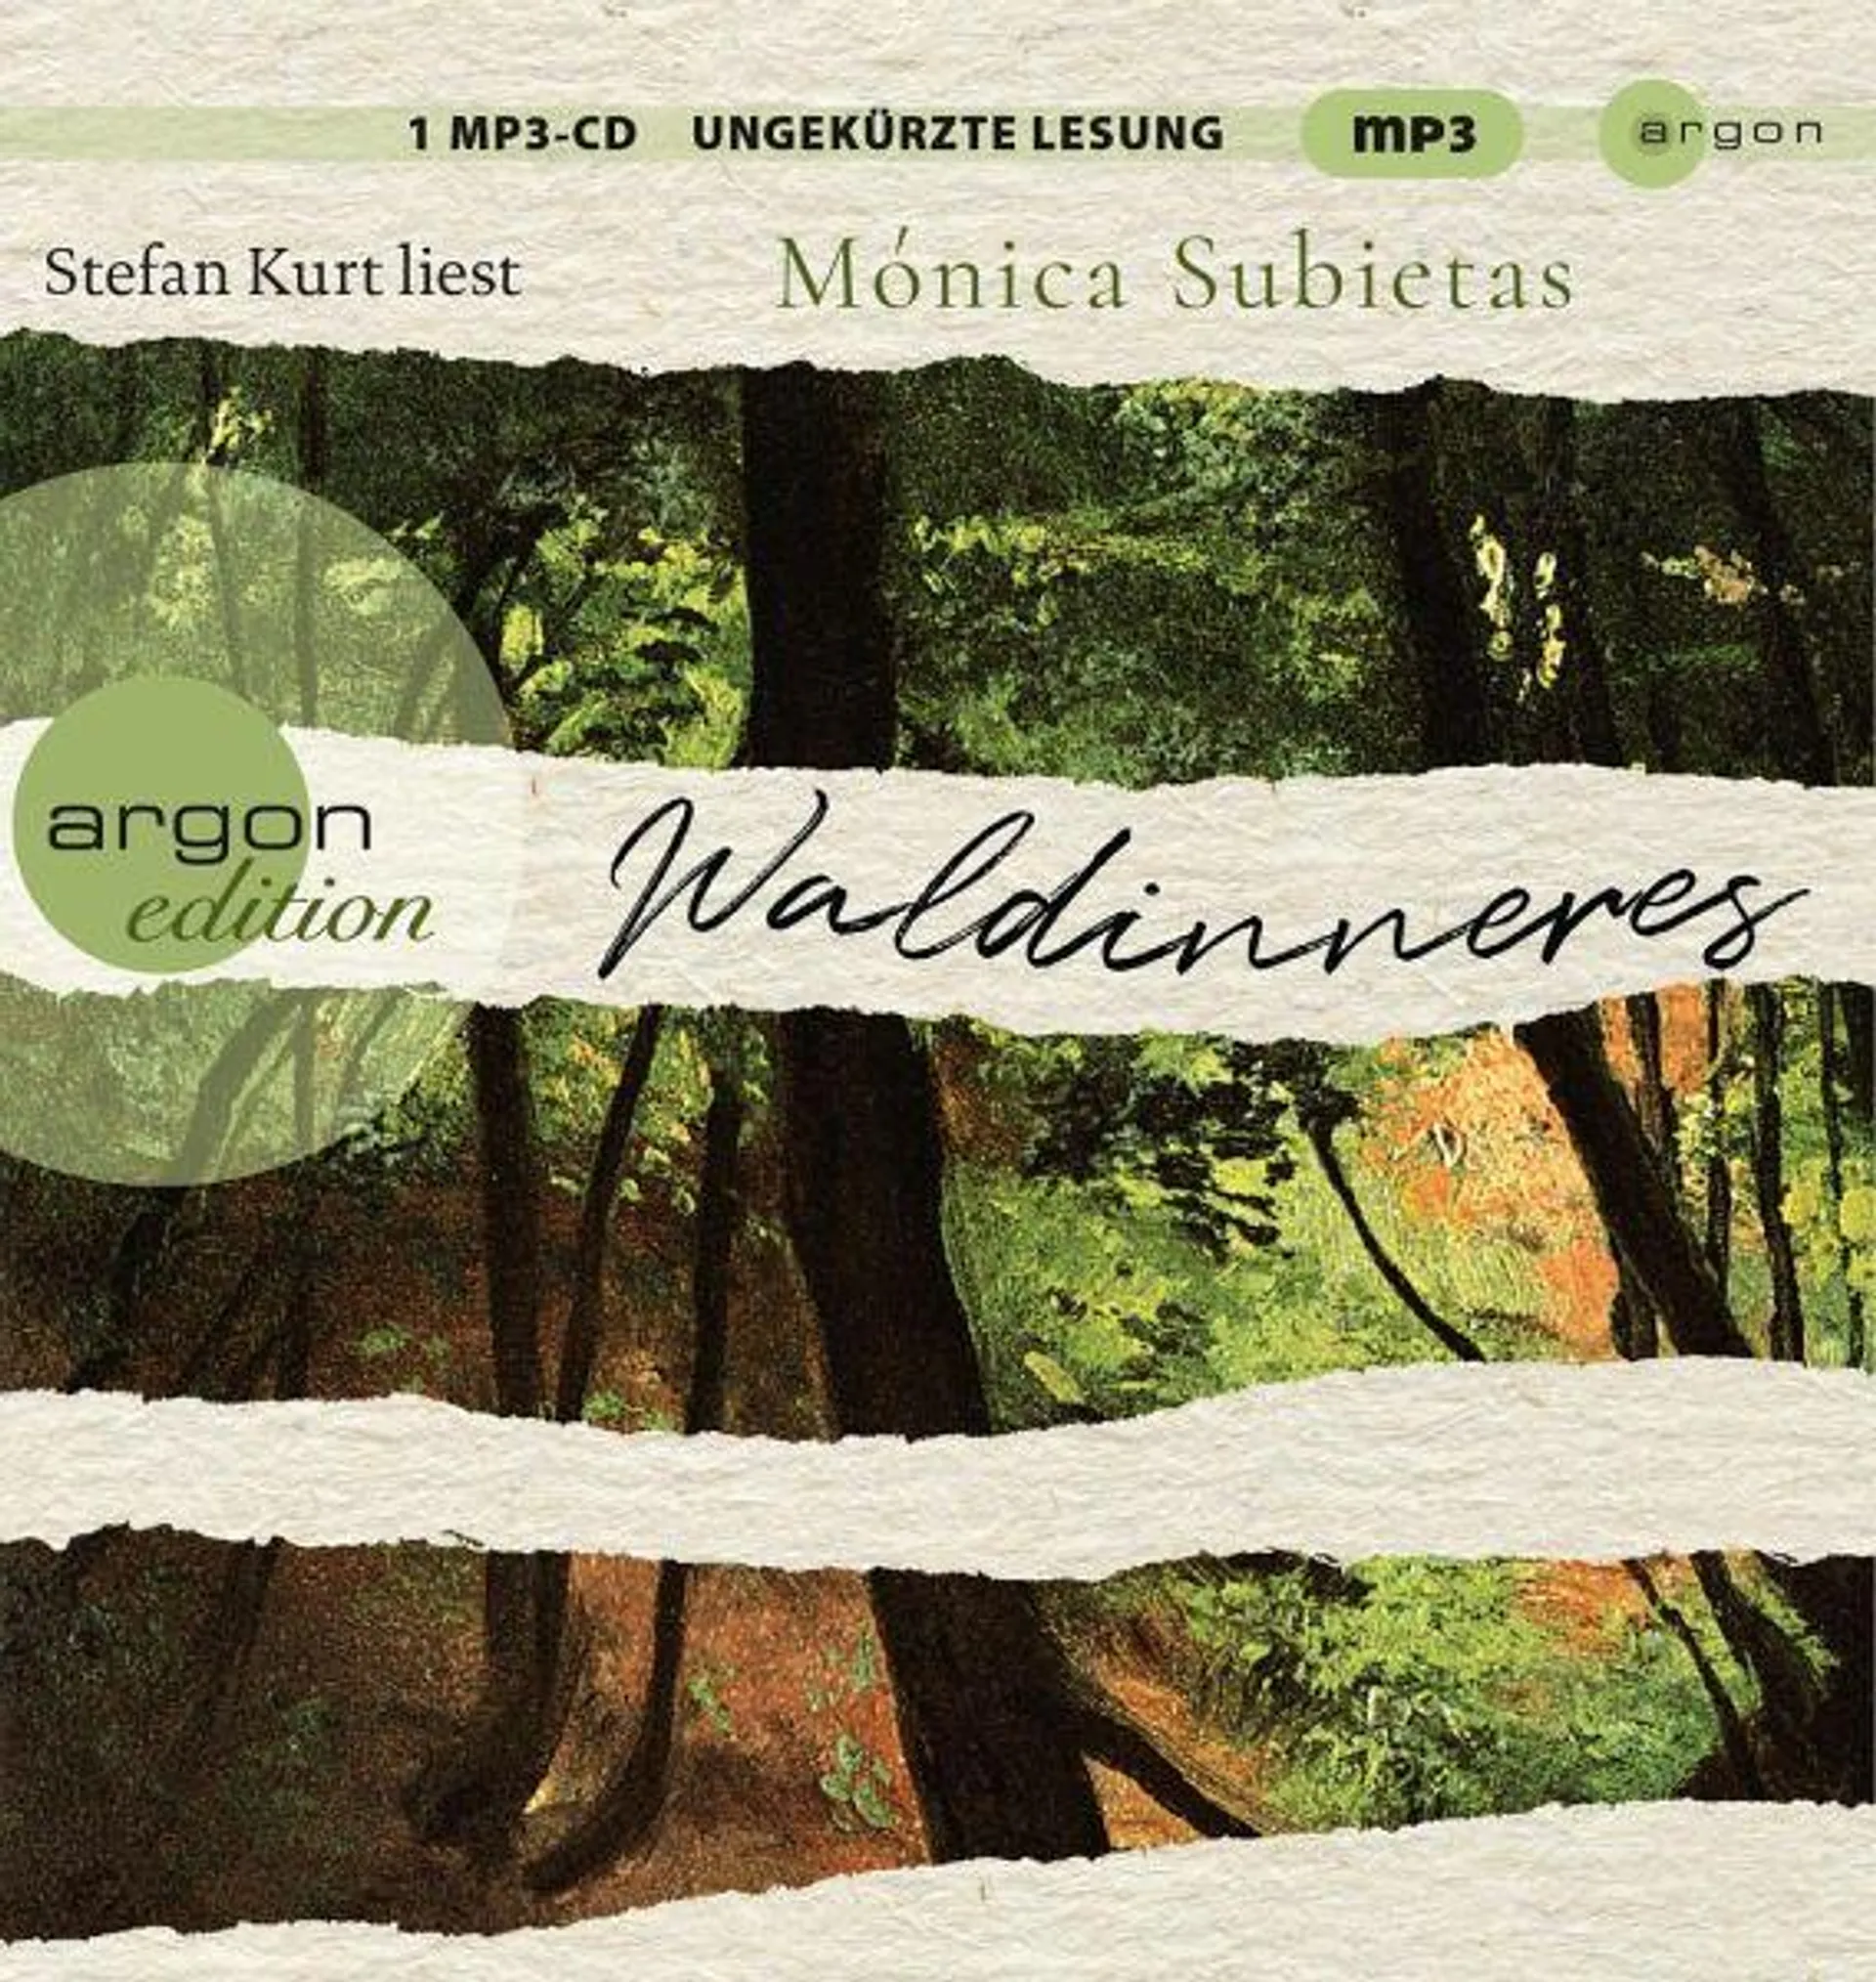 Waldinneres, mp3-CD